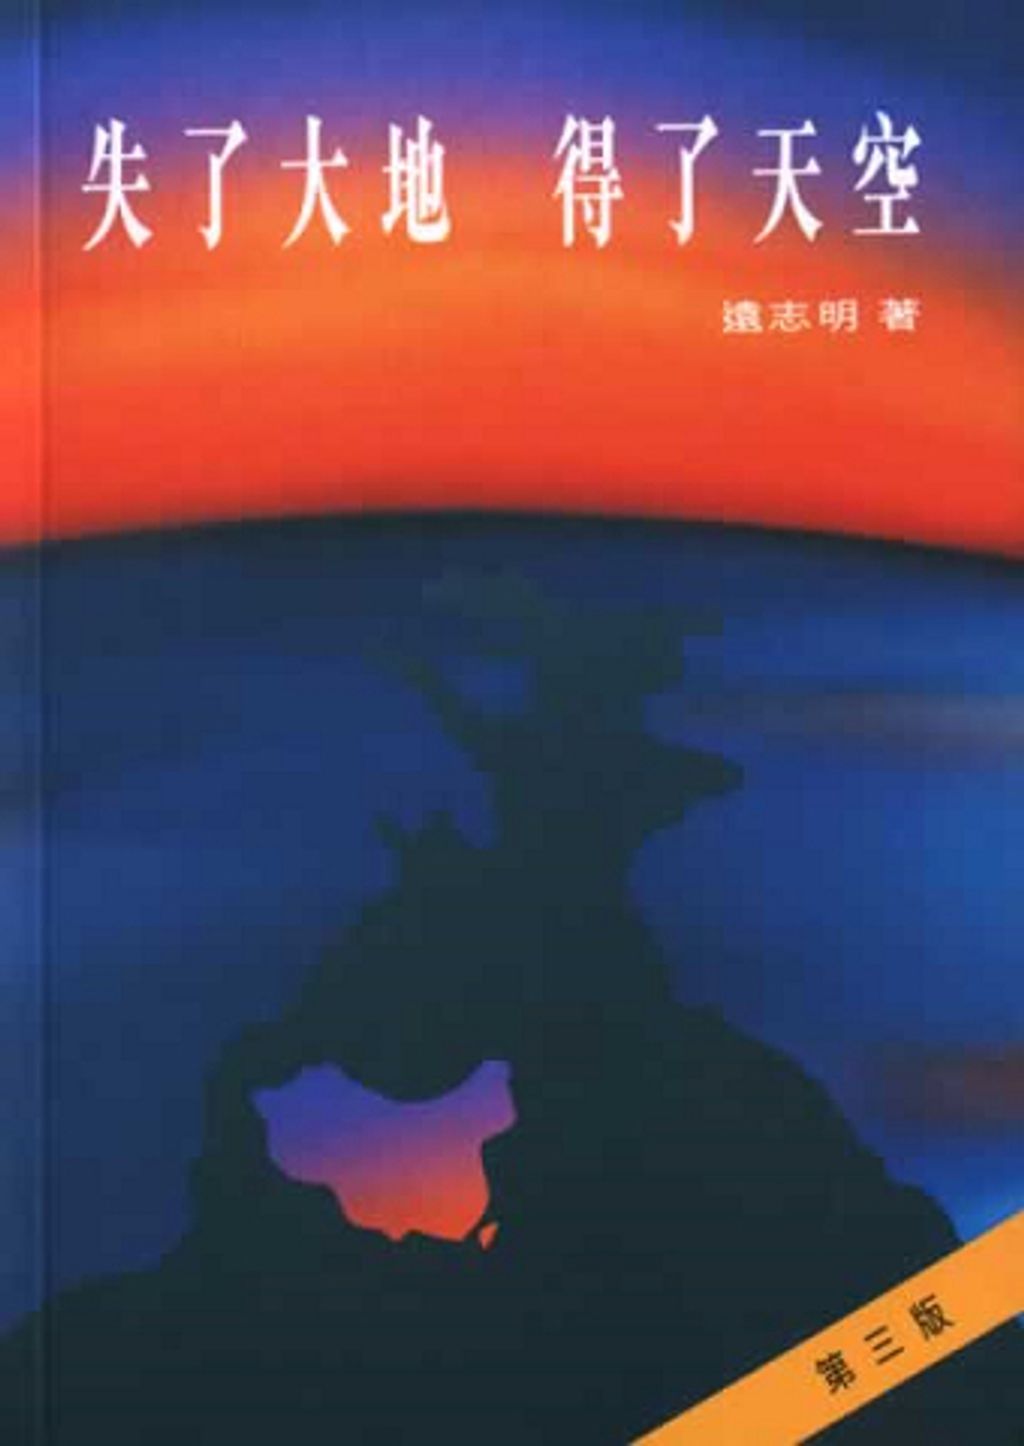 03 Yuan Book 600.jpg